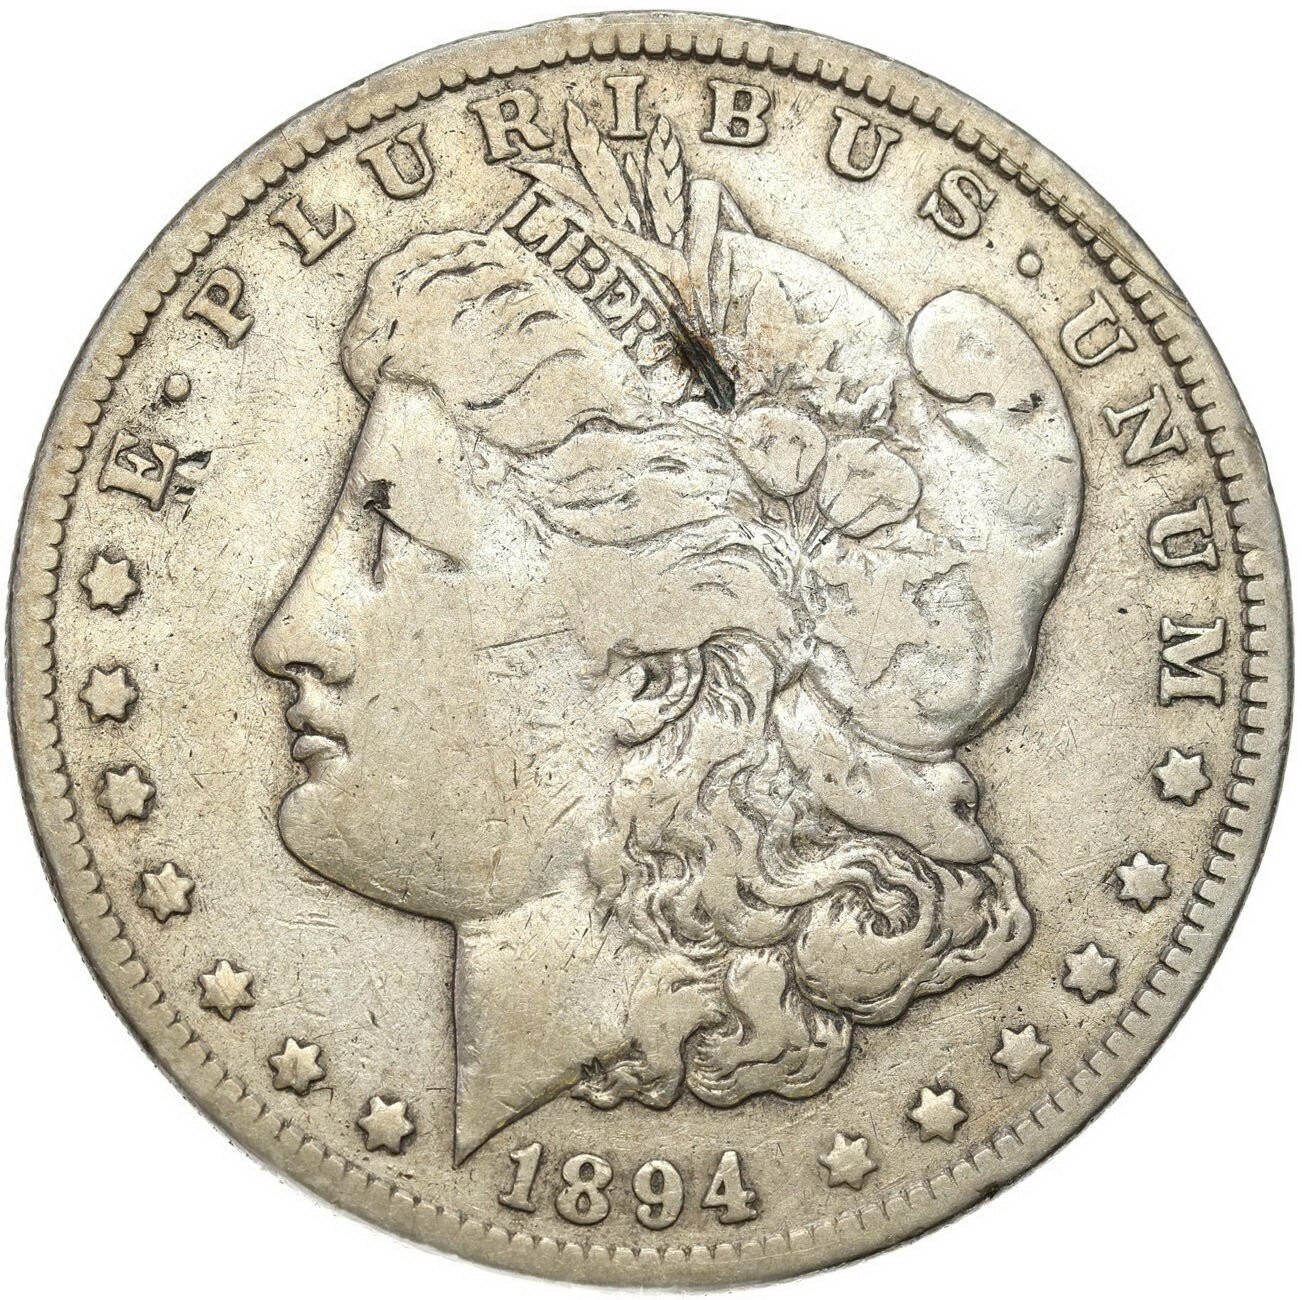 USA 1 dolar 1894 O, New Orleans 